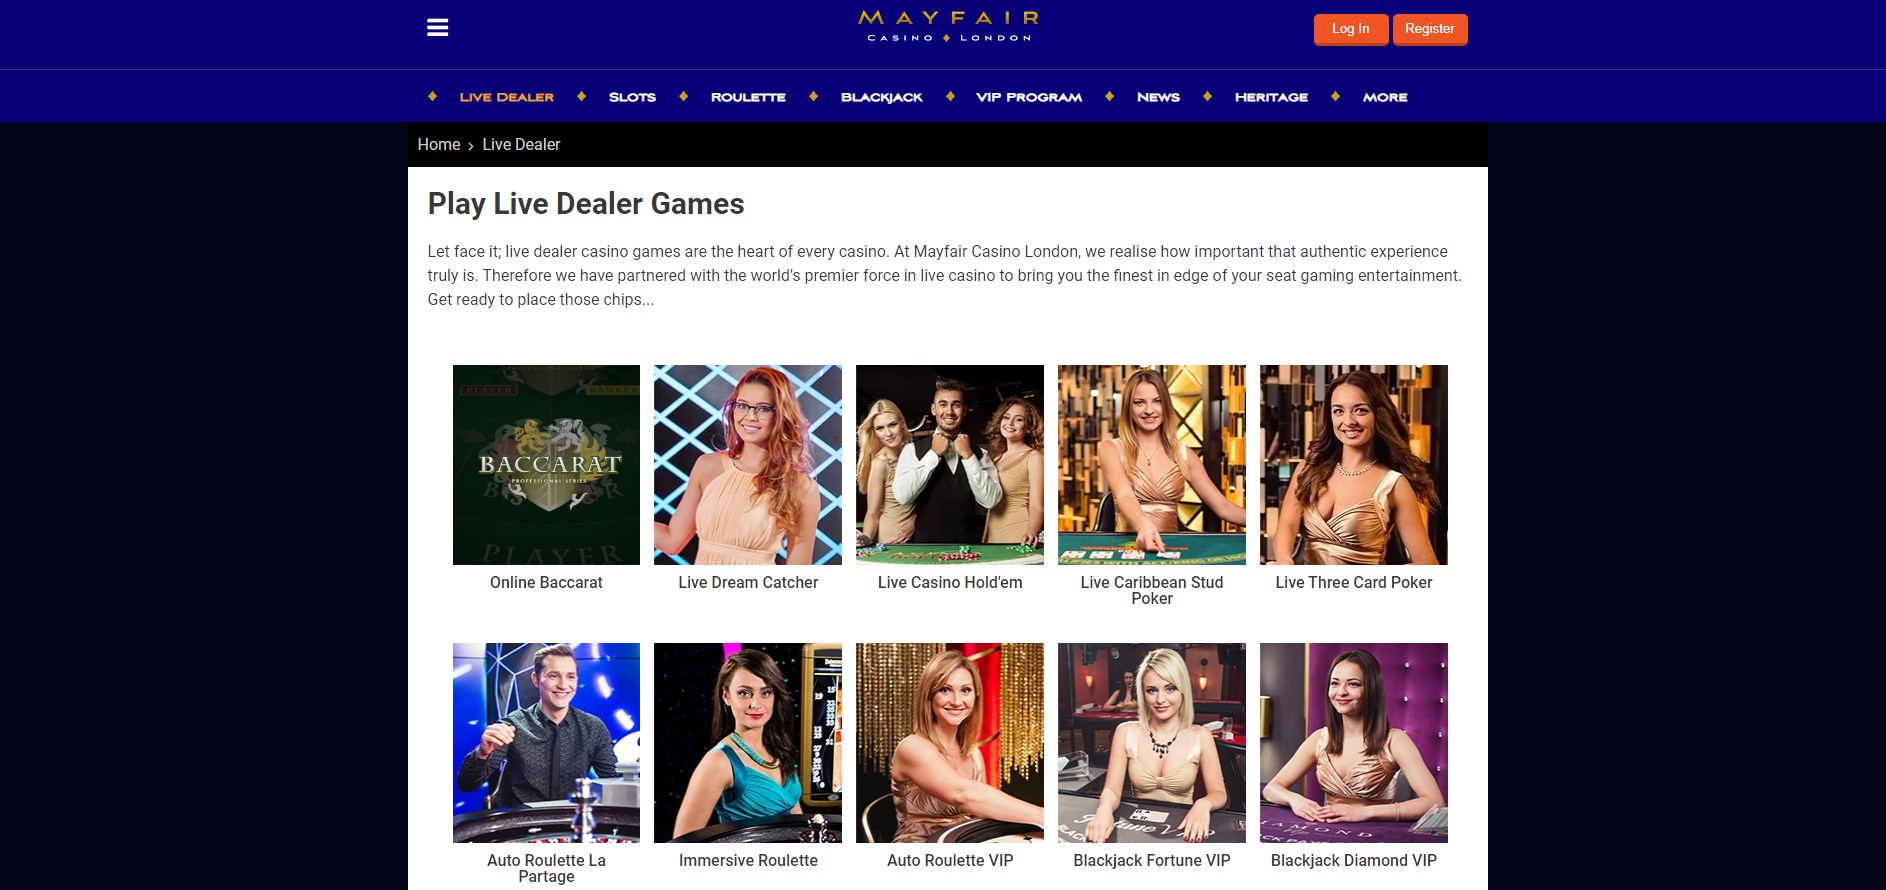 Mayfair Casino London Live Dealer Games